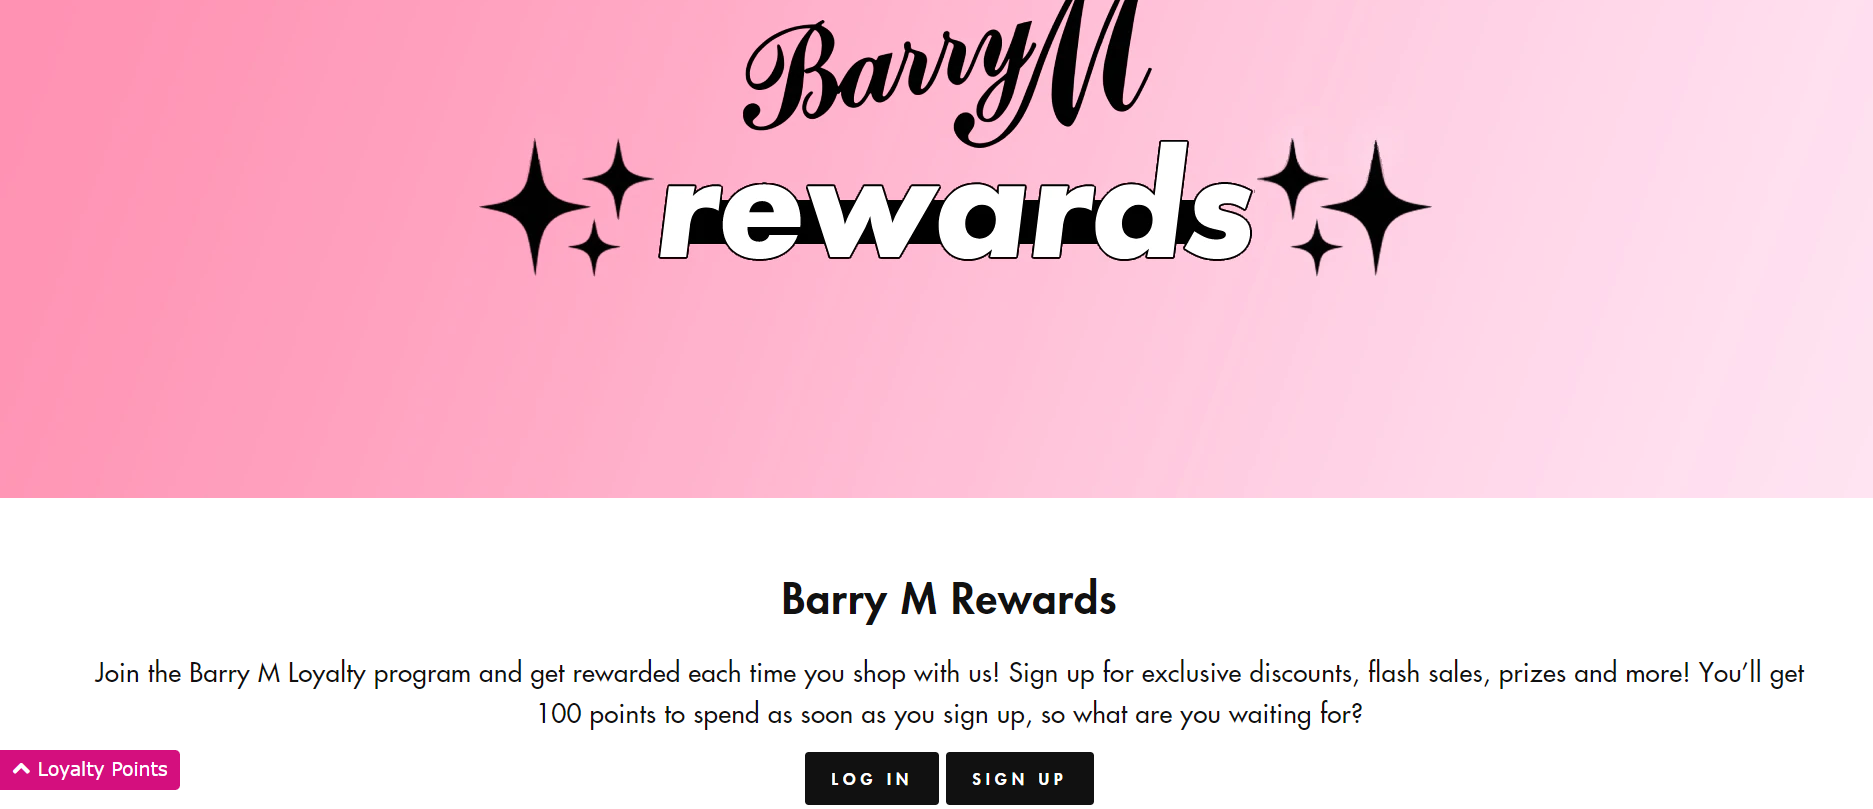 Barry M Rewards page